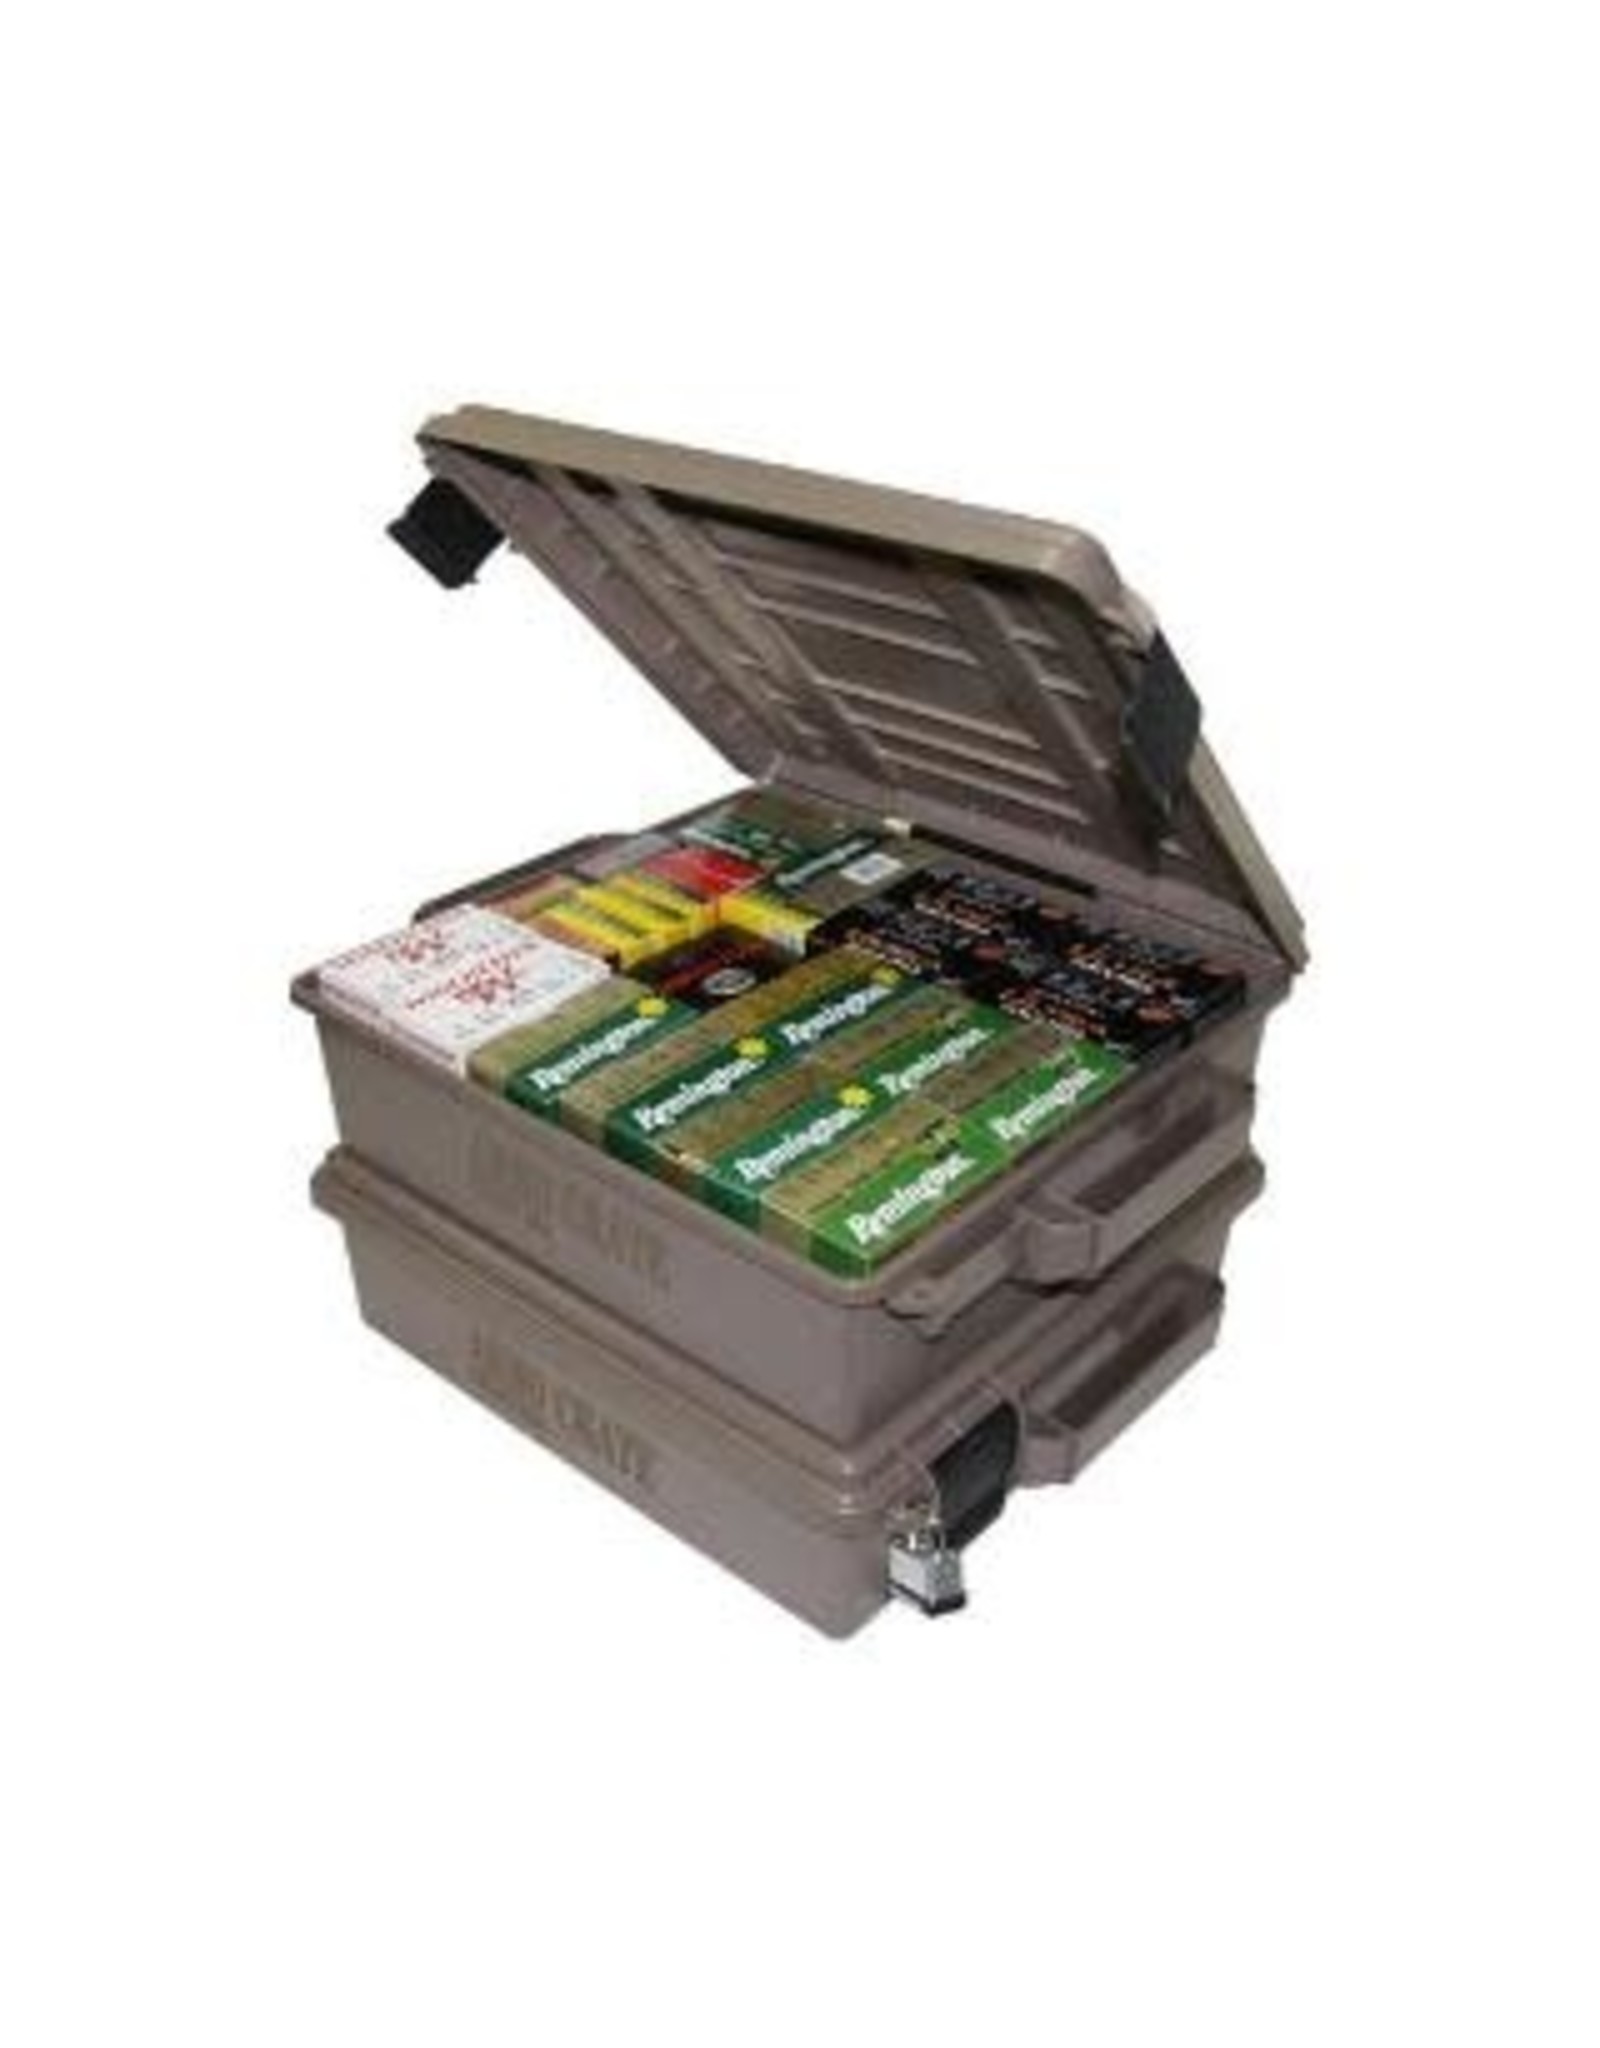 MTM MTM Ammo Crate / Utility Box